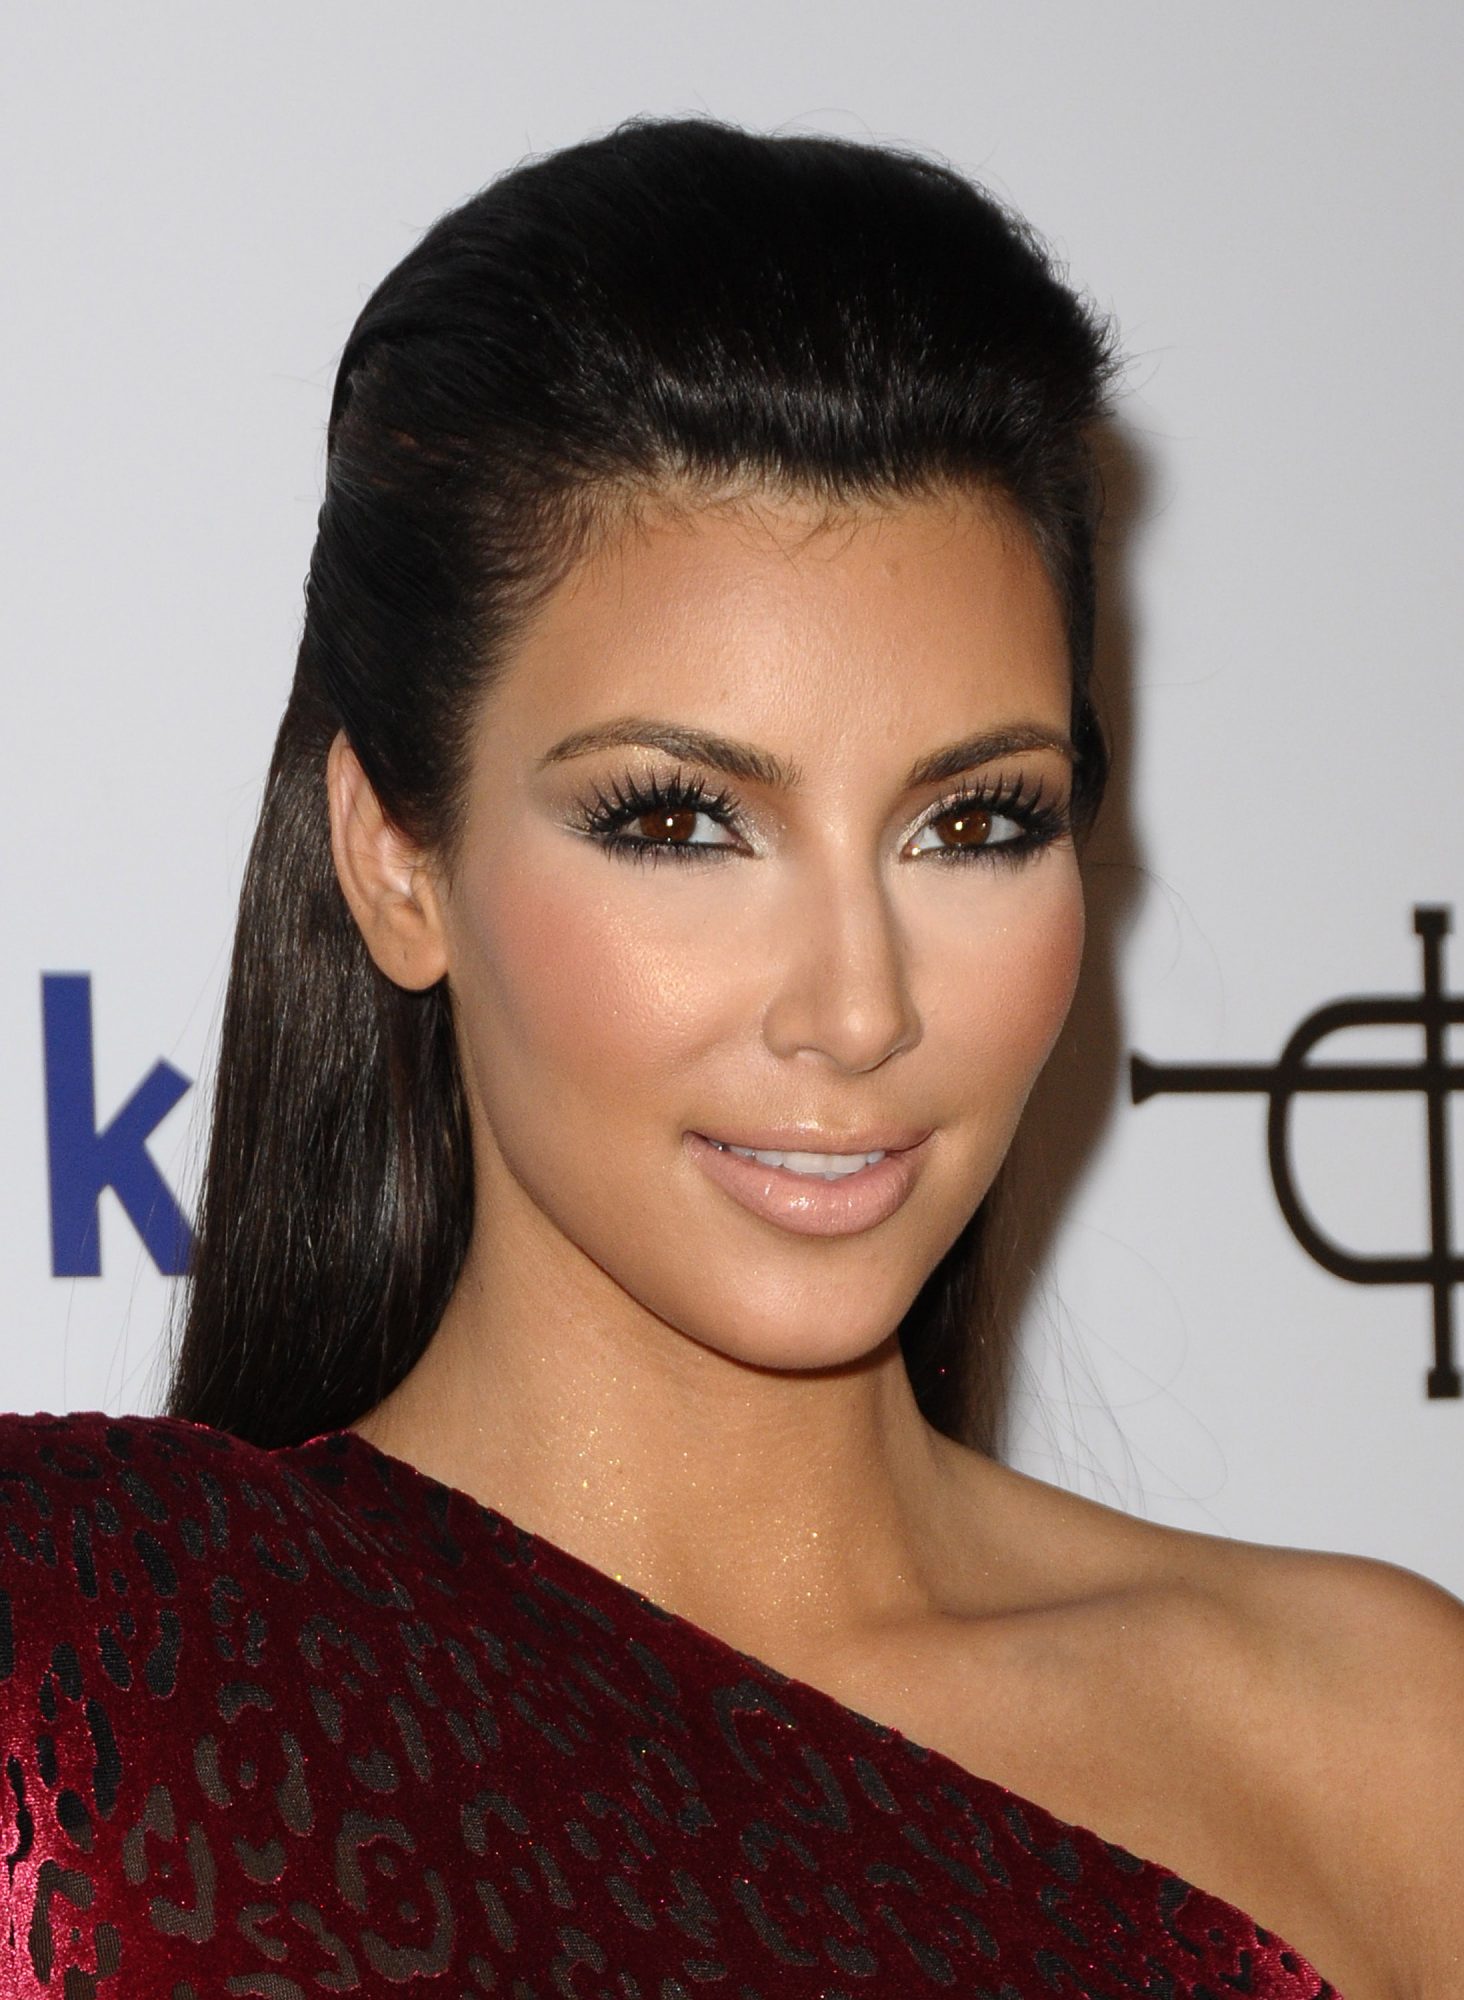 Kim Kardashian biggest makeup regret is the super white under-eye